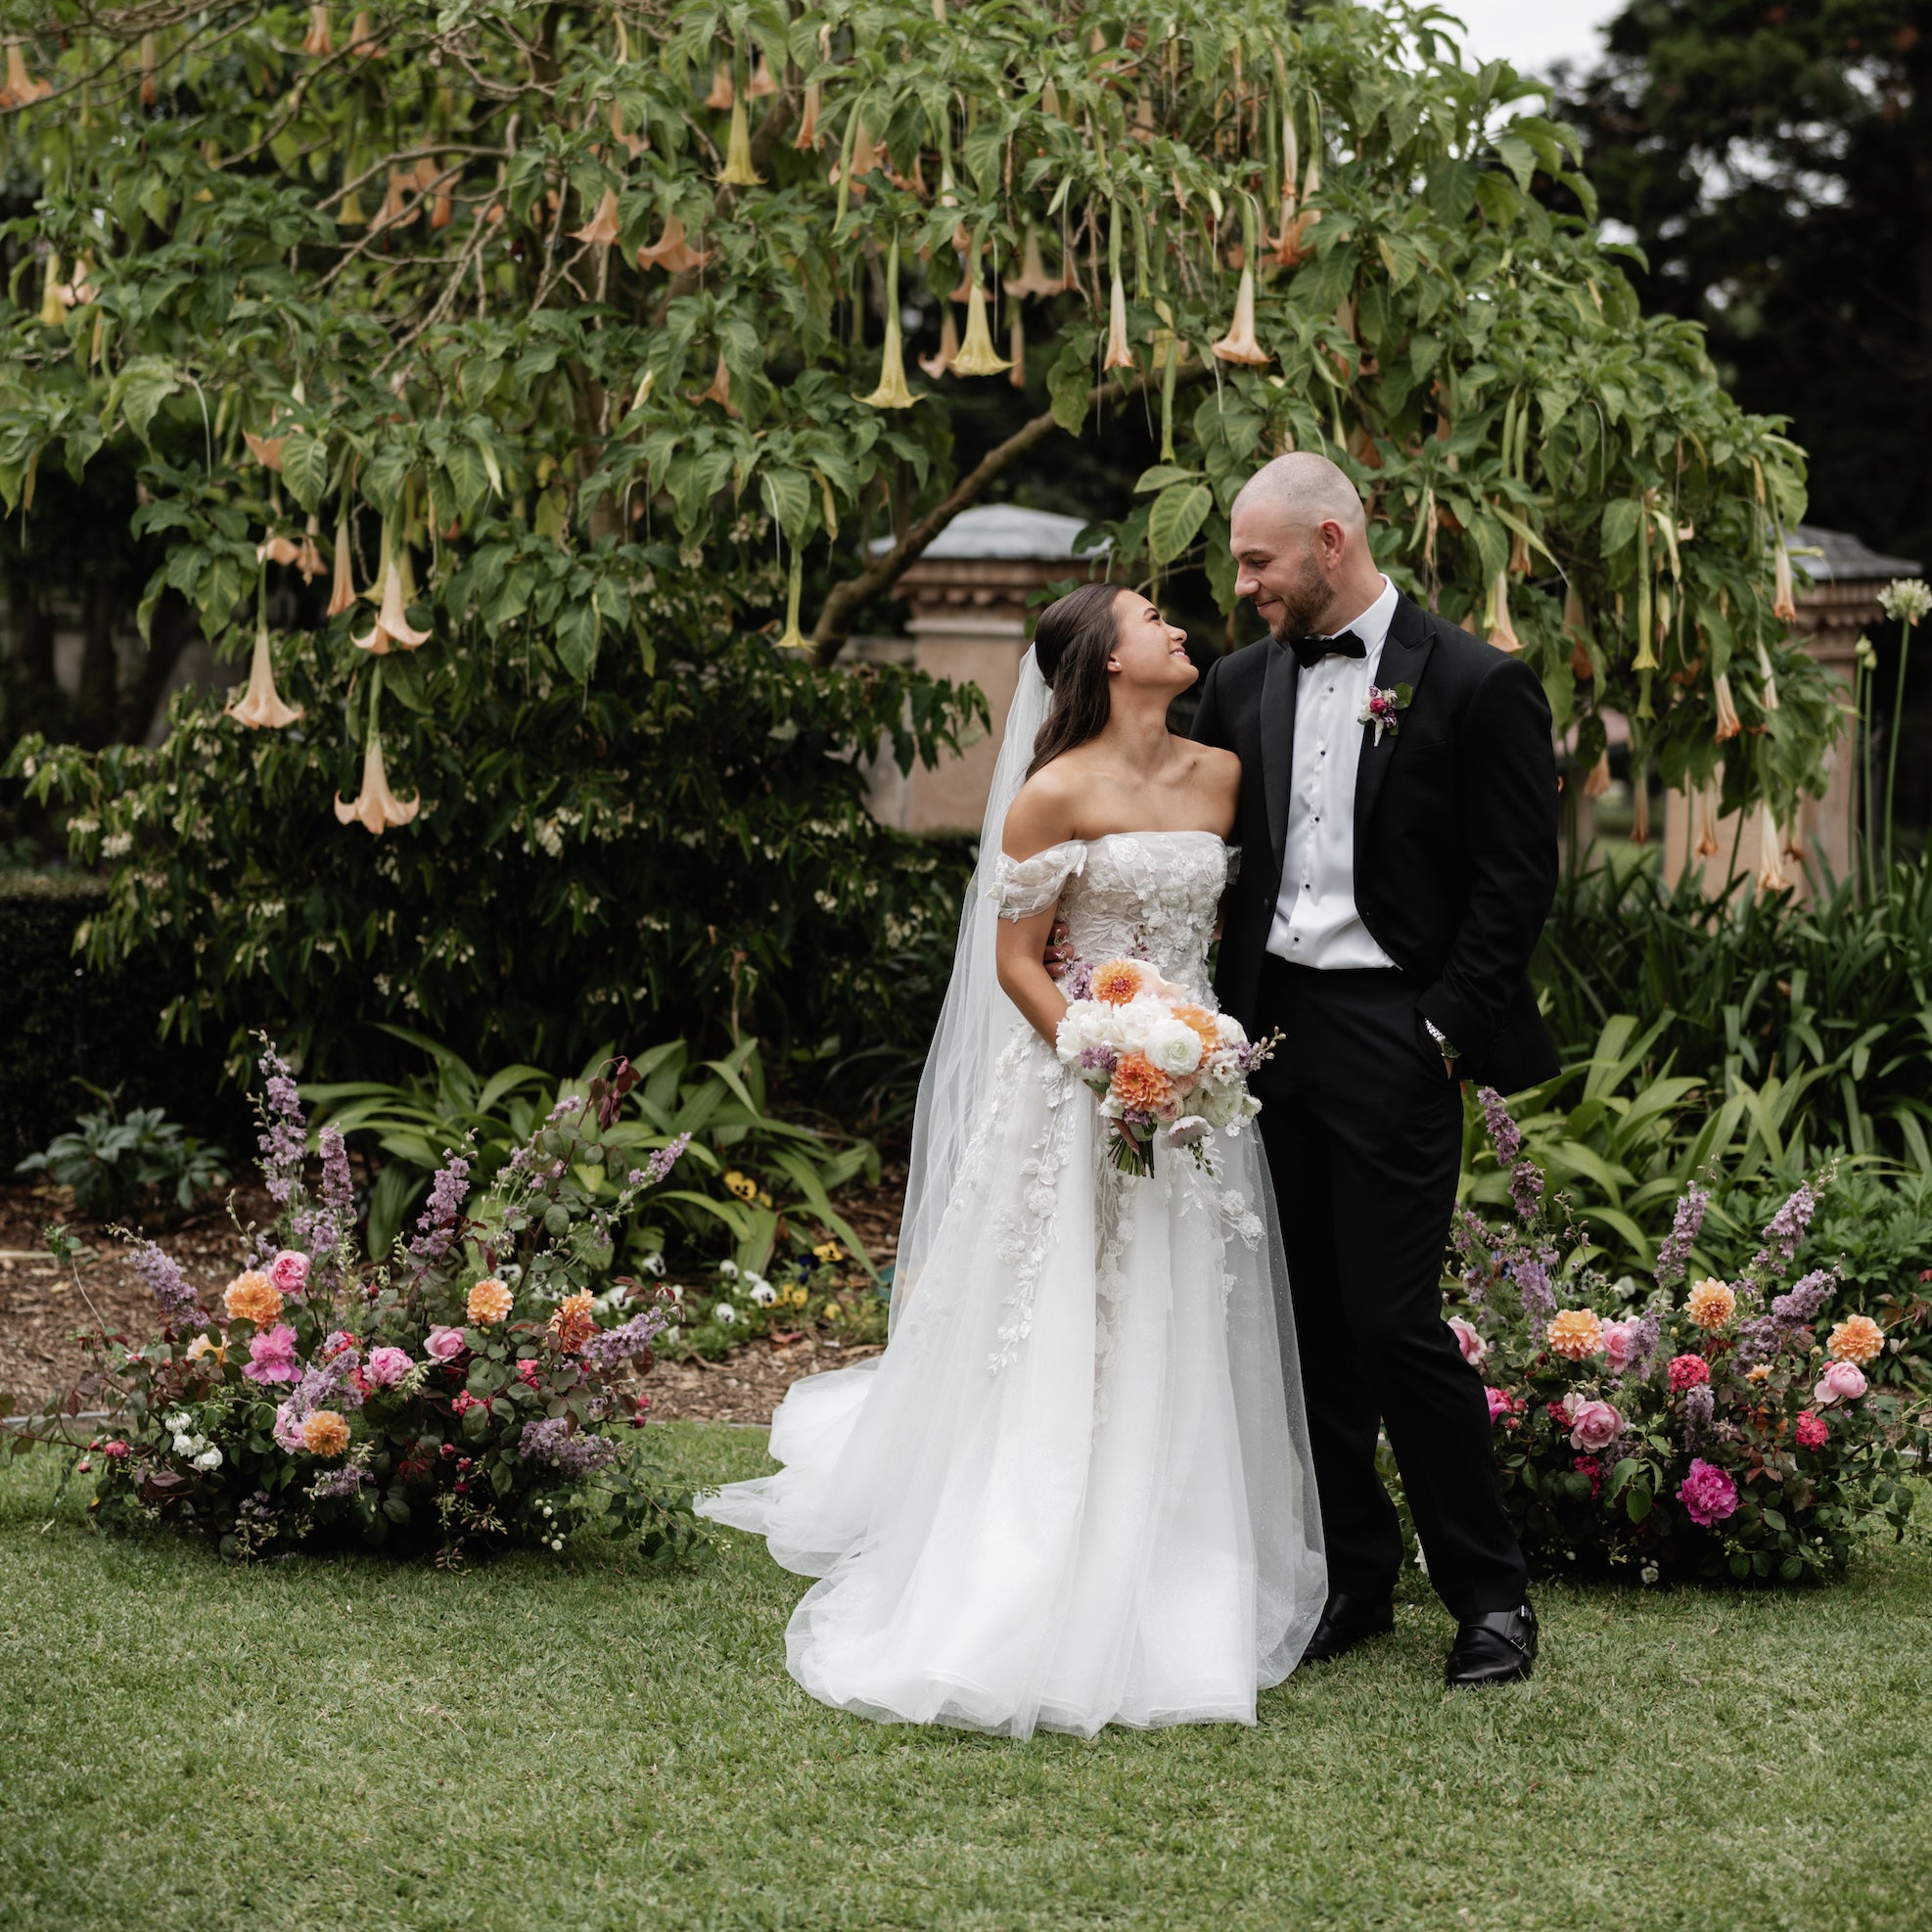 Expert Tips for Choosing Your Low-Footprint Wedding Florist